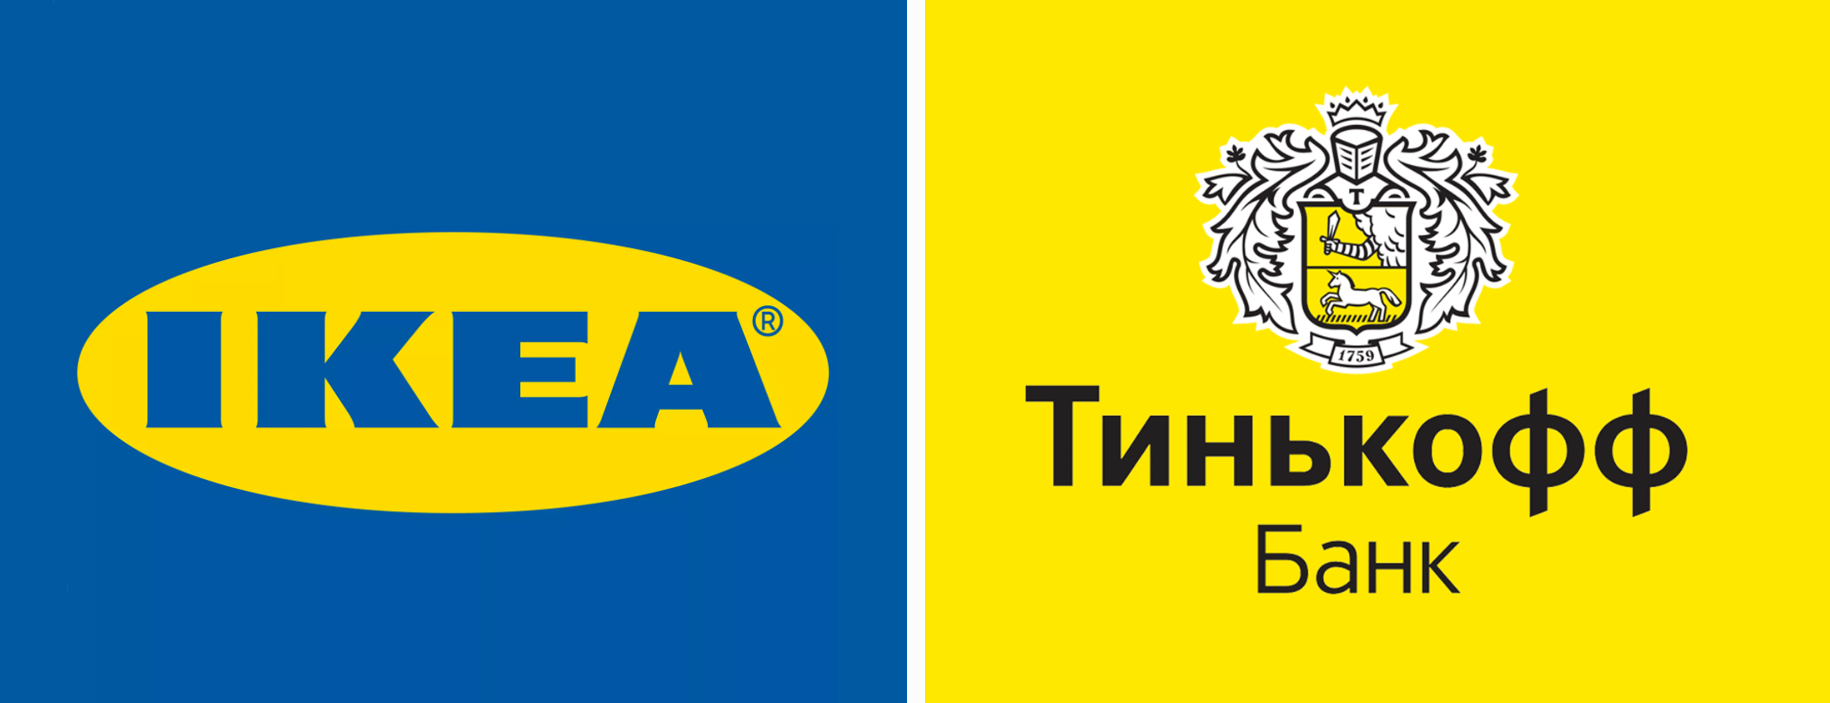 Логотипы шведской компании IKEA и банка «Тинькофф»